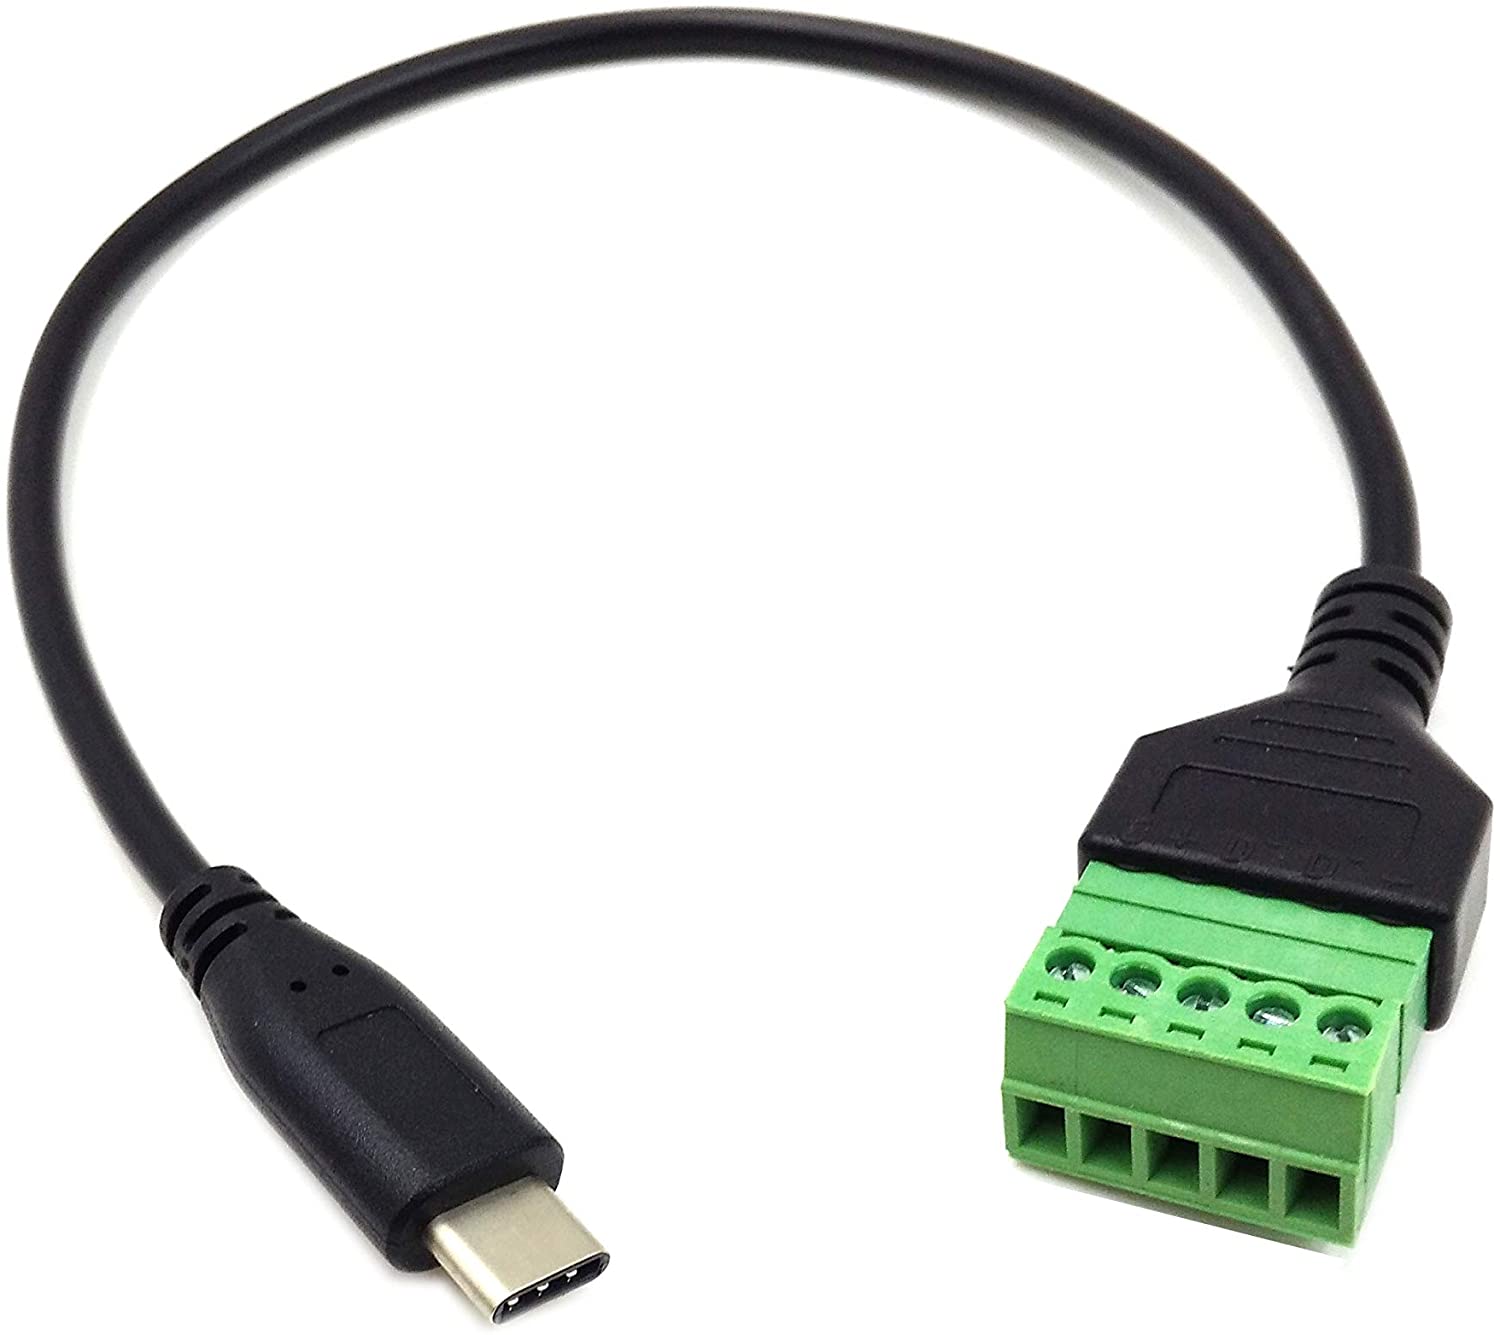 Adaptador USB tipo C hembra a USB 3.1 macho (tipo A), metalico / mod.  A1034NI - 0060135